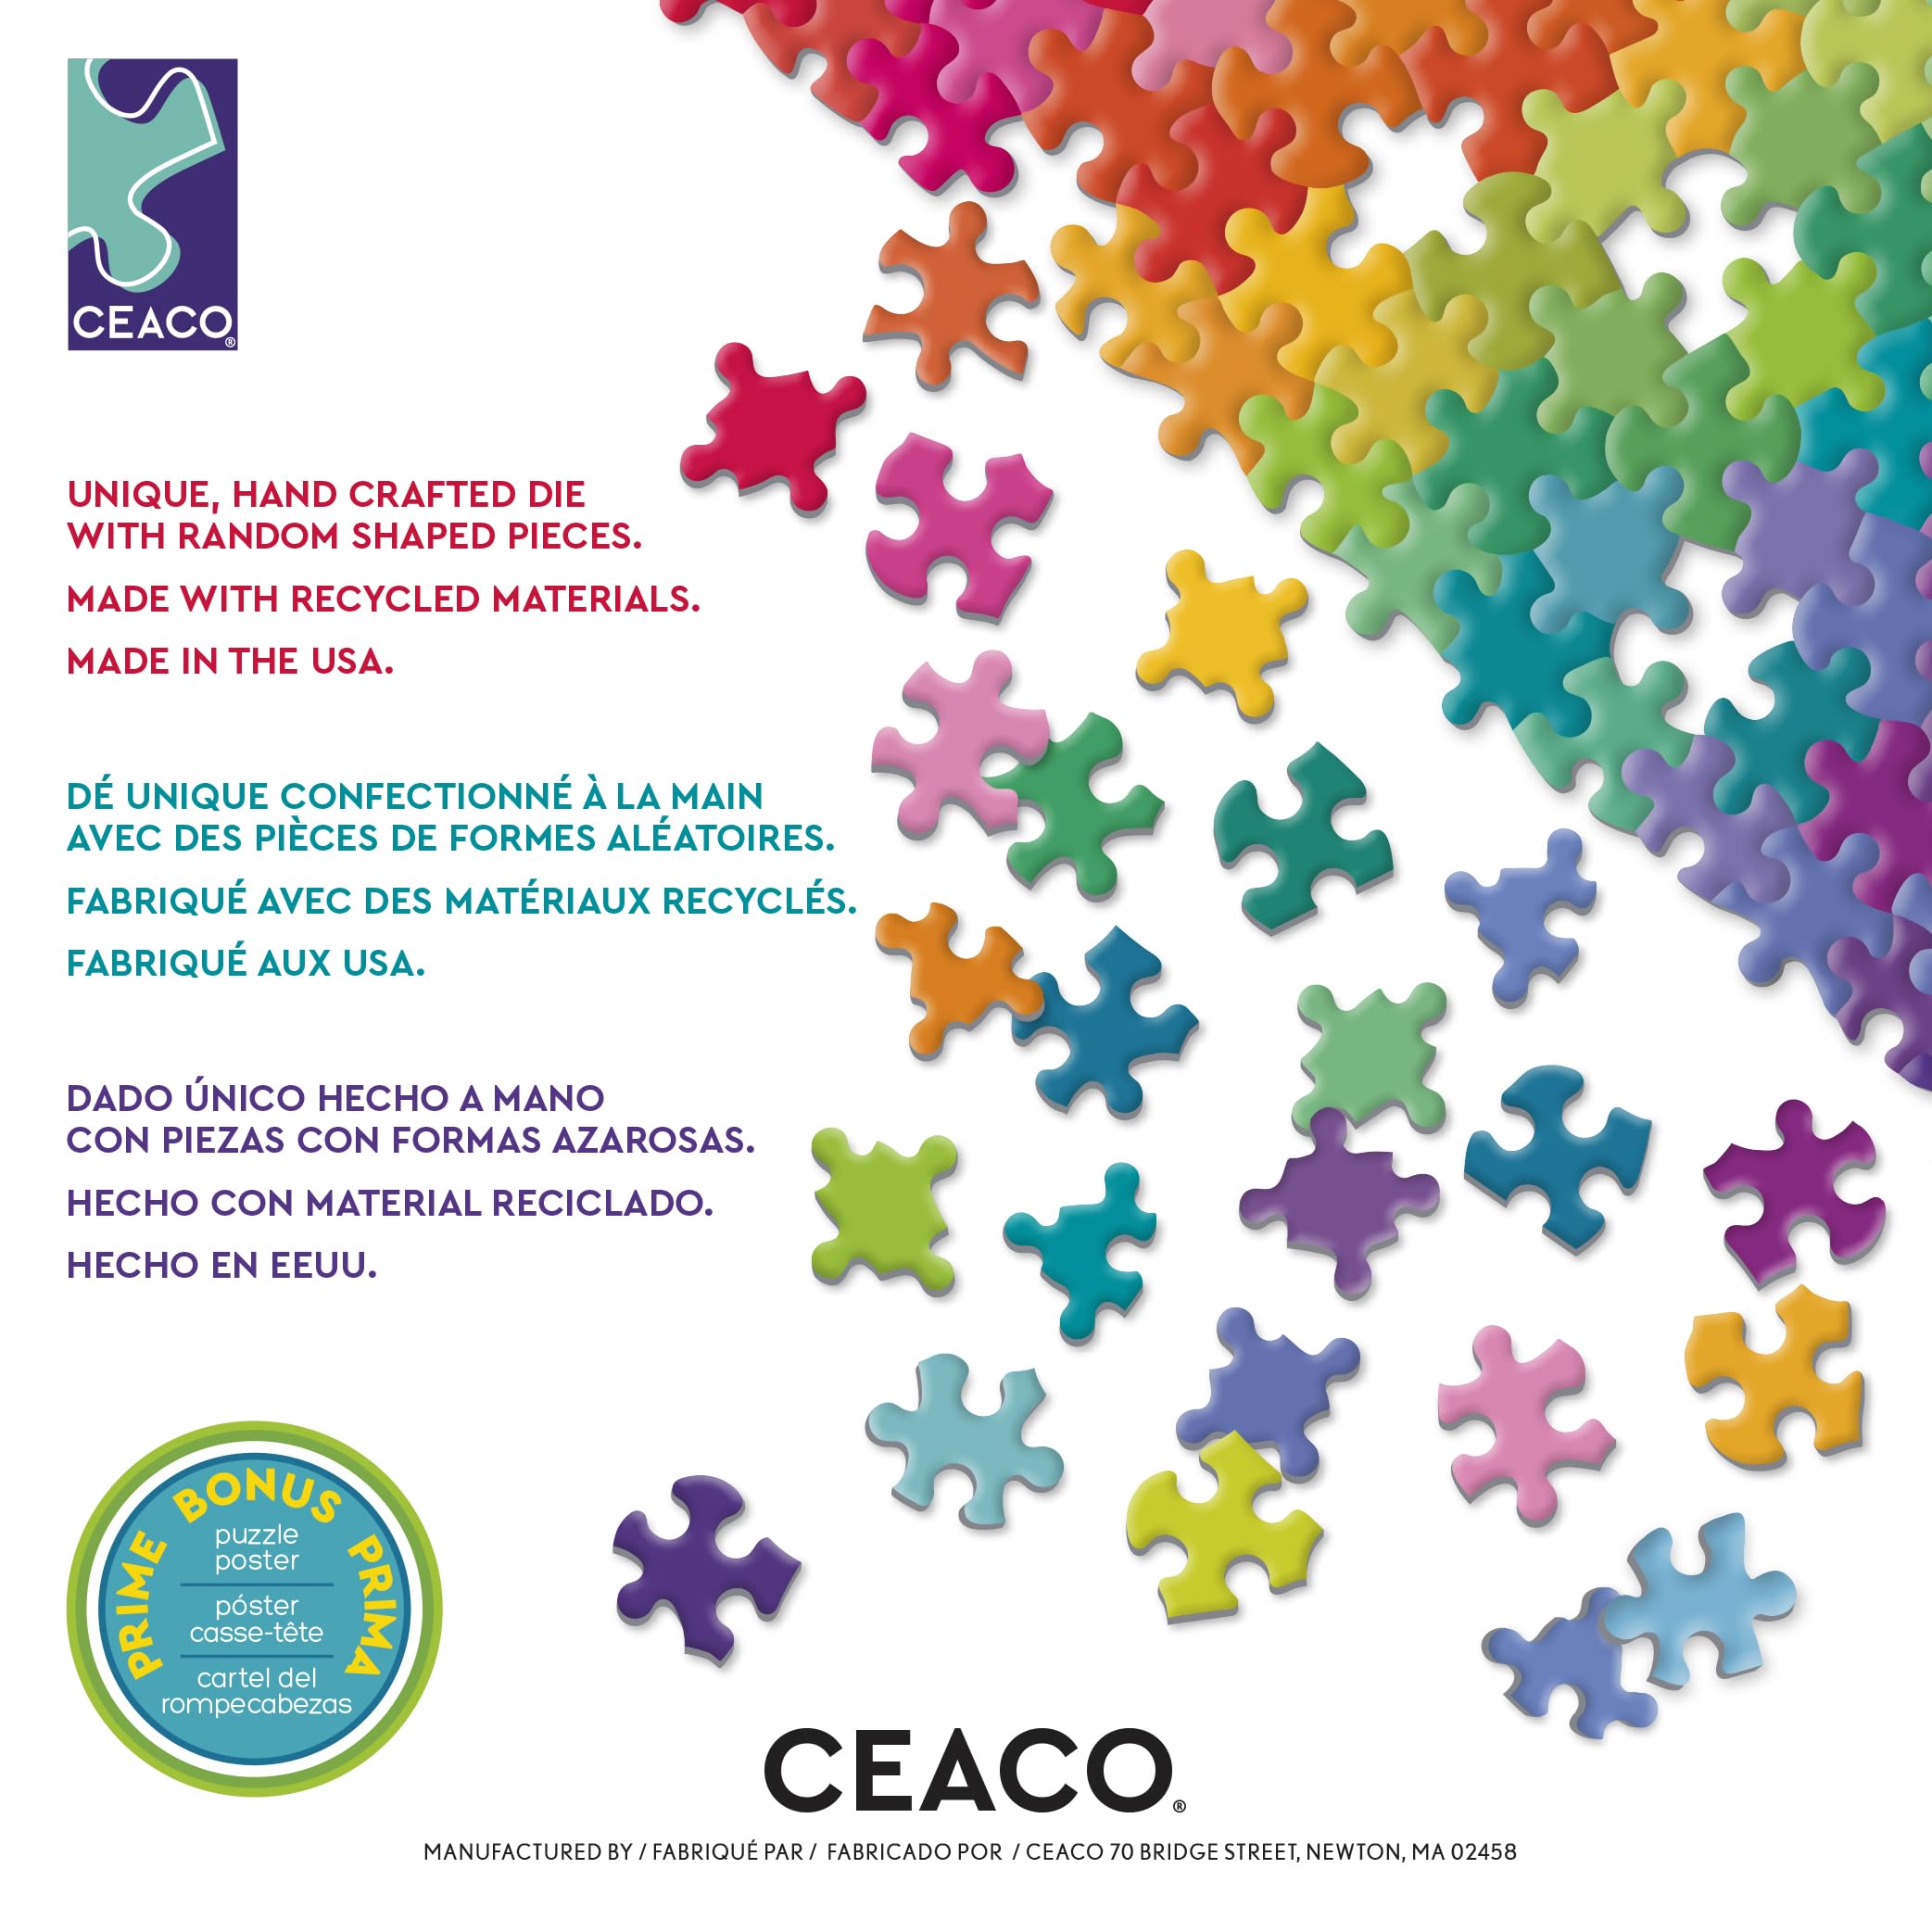 Ceaco - Pop of Color - 750 Piece Jigsaw Puzzle